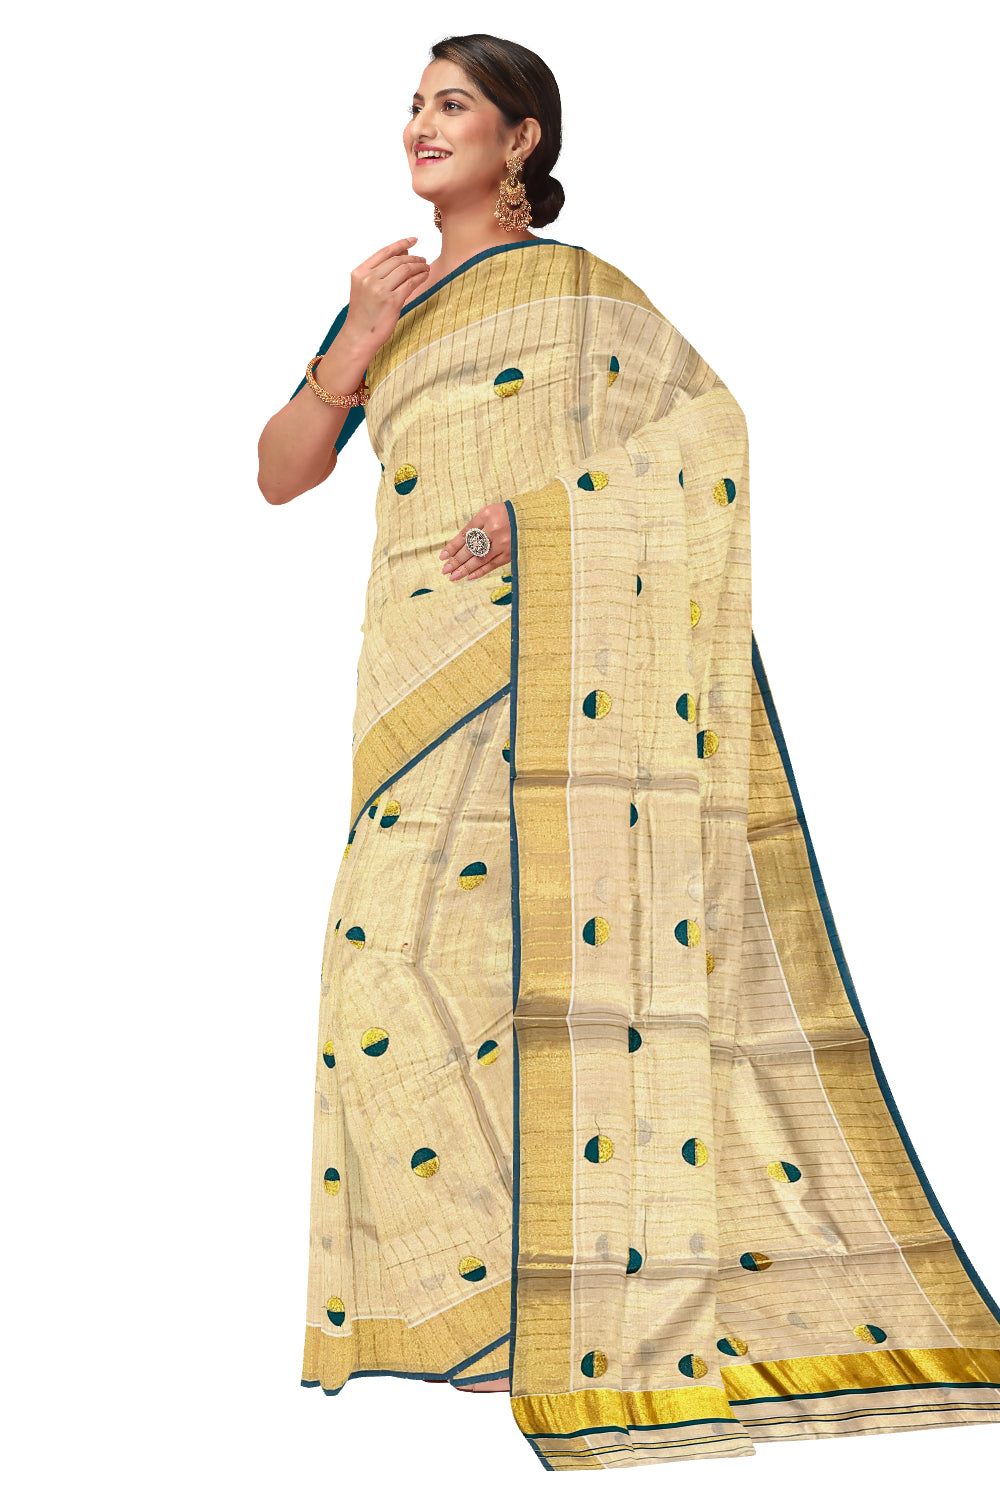 Kerala Tissue Kasavu Saree with Kasavu Lines Across Body and Green Semi Polka Woven Designs